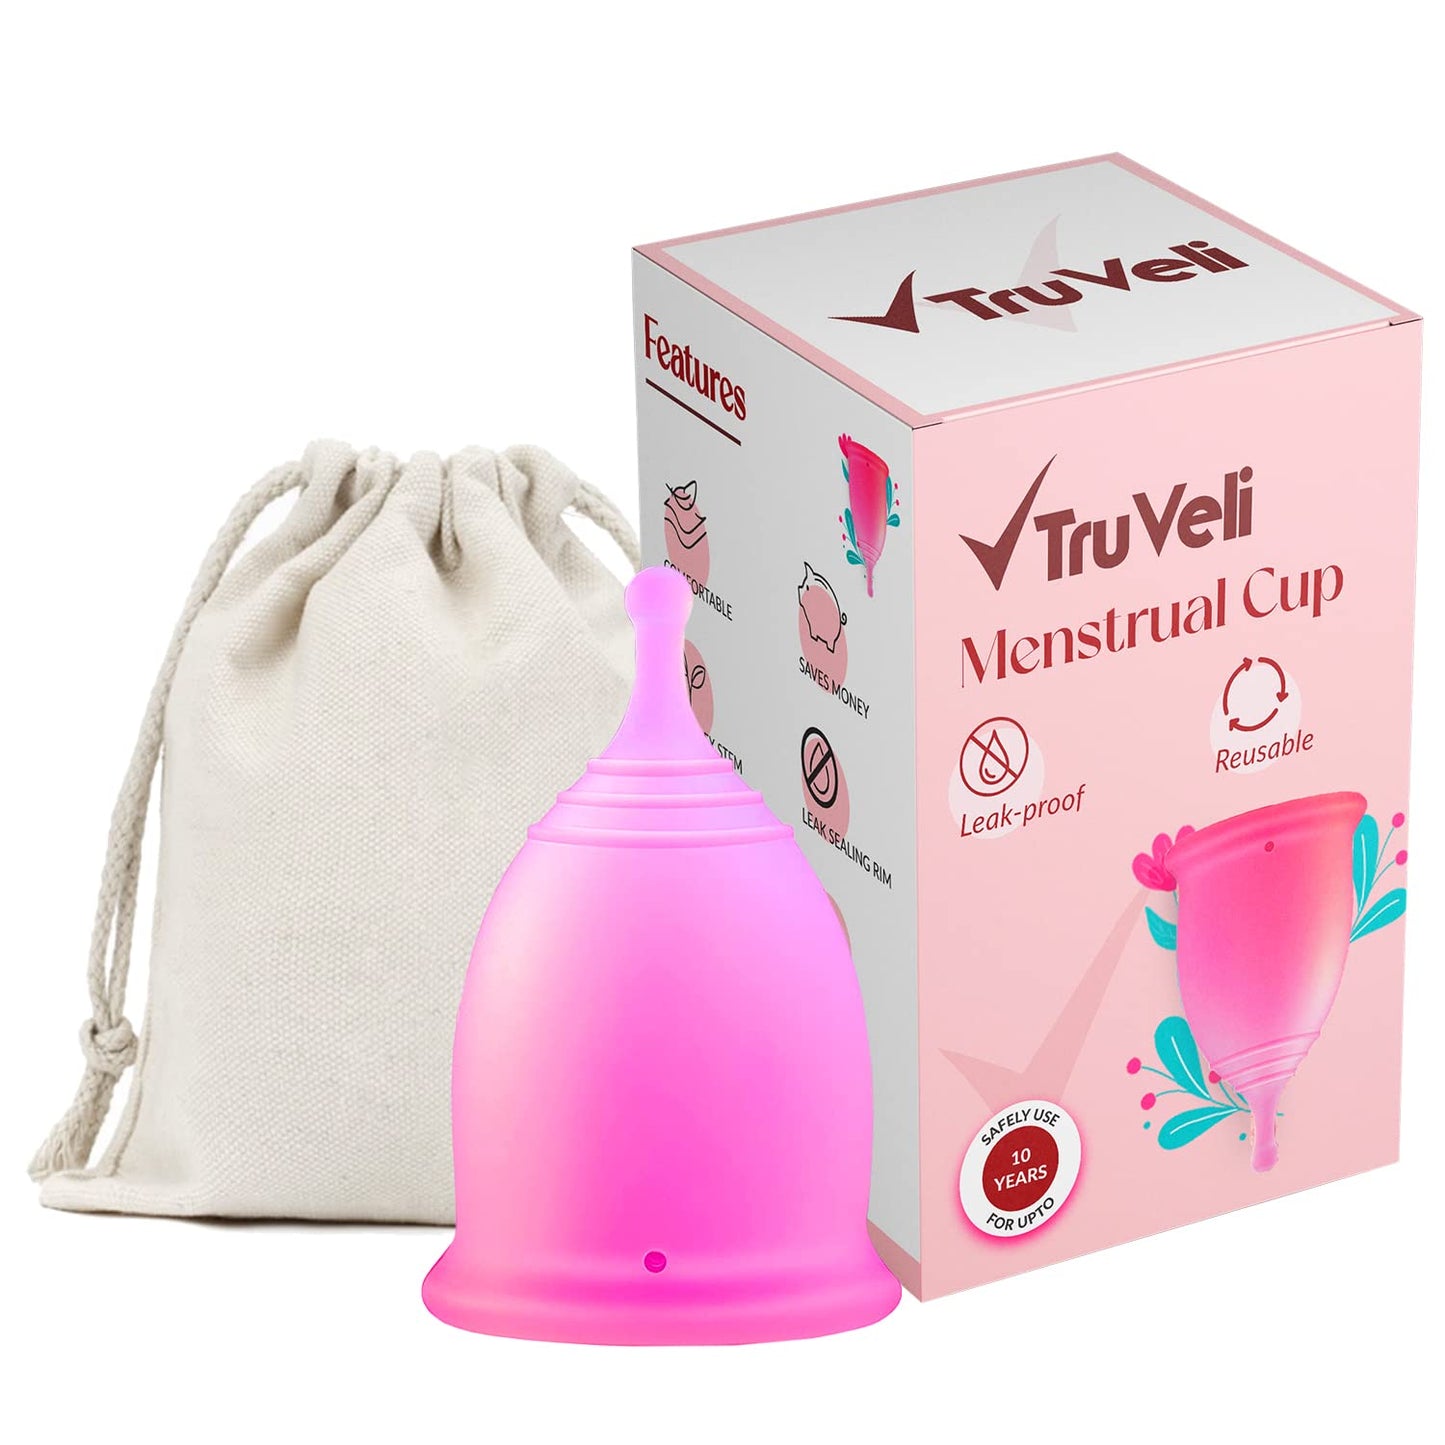 Reusable Menstrual Cup (Medium Size)